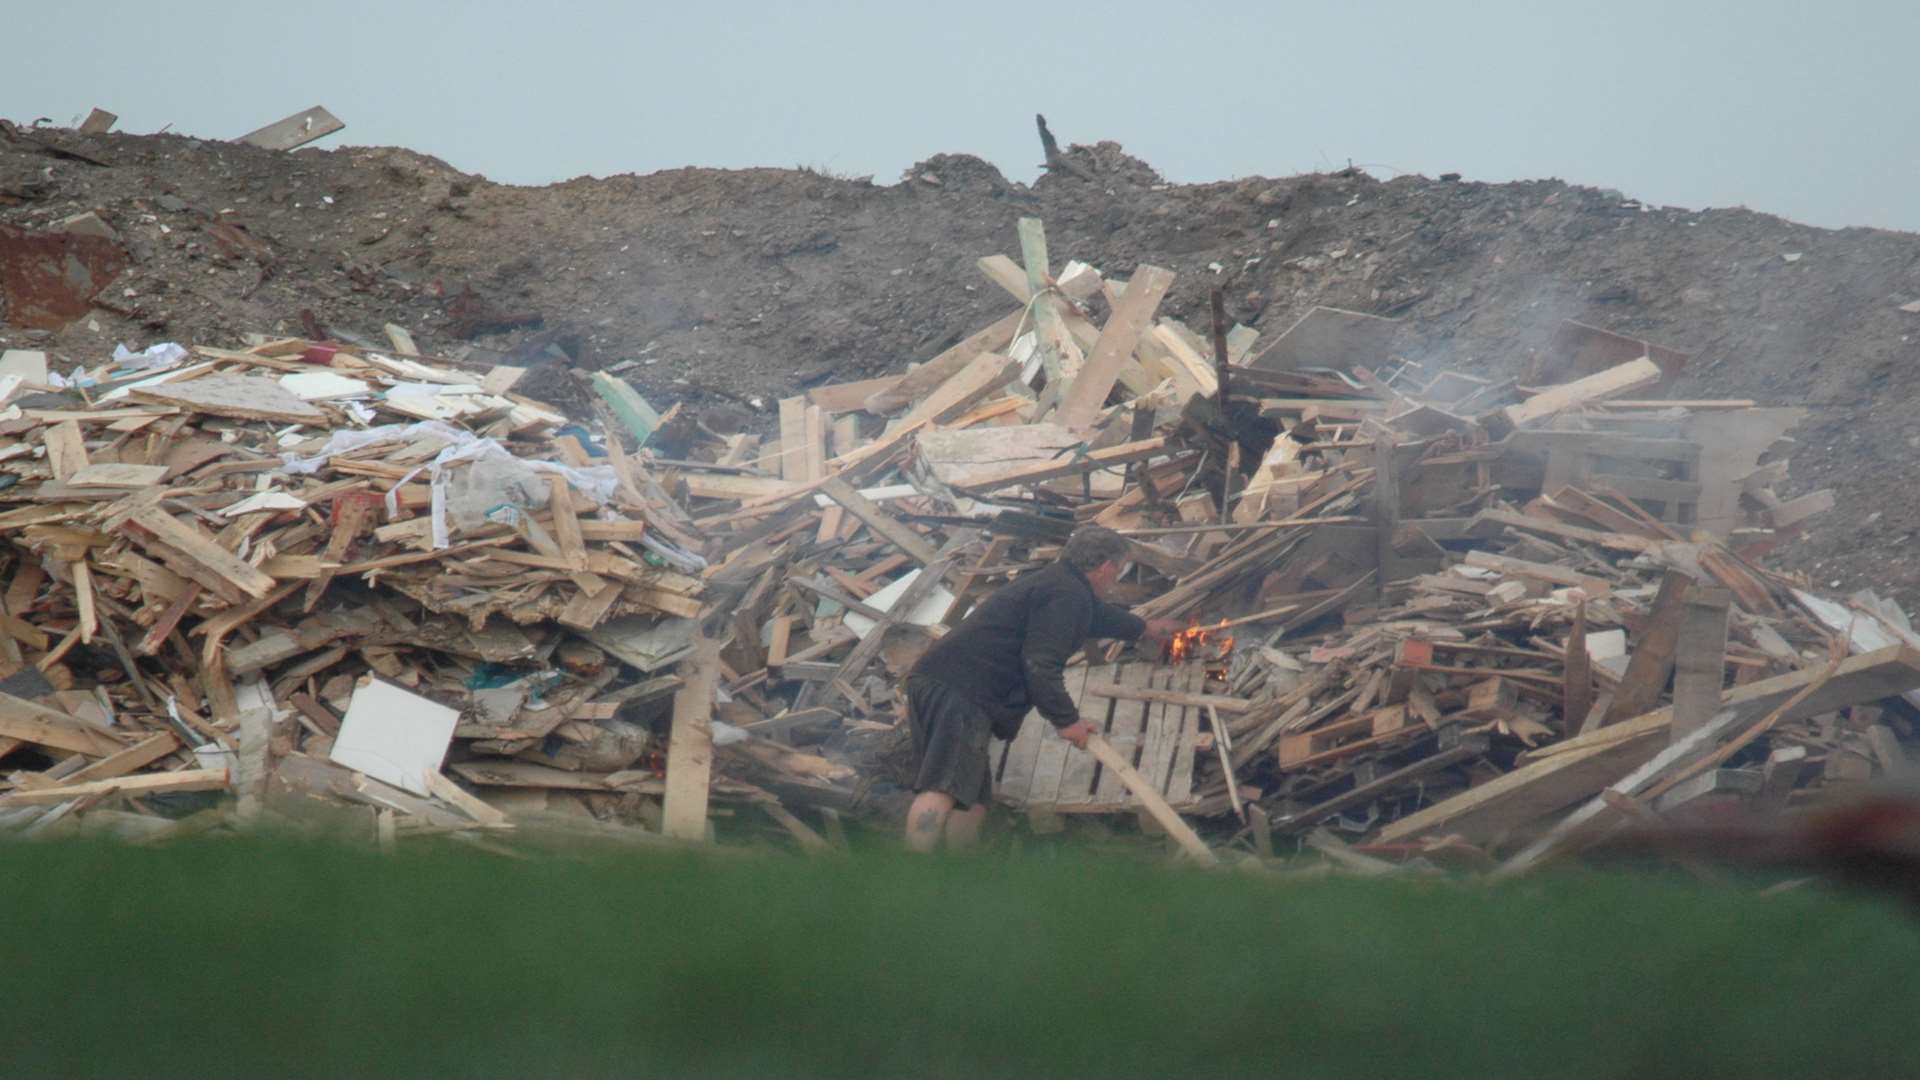 Photographs taken by environmental officers investigating illegal waste dumping at Marlow Farm near Lenham